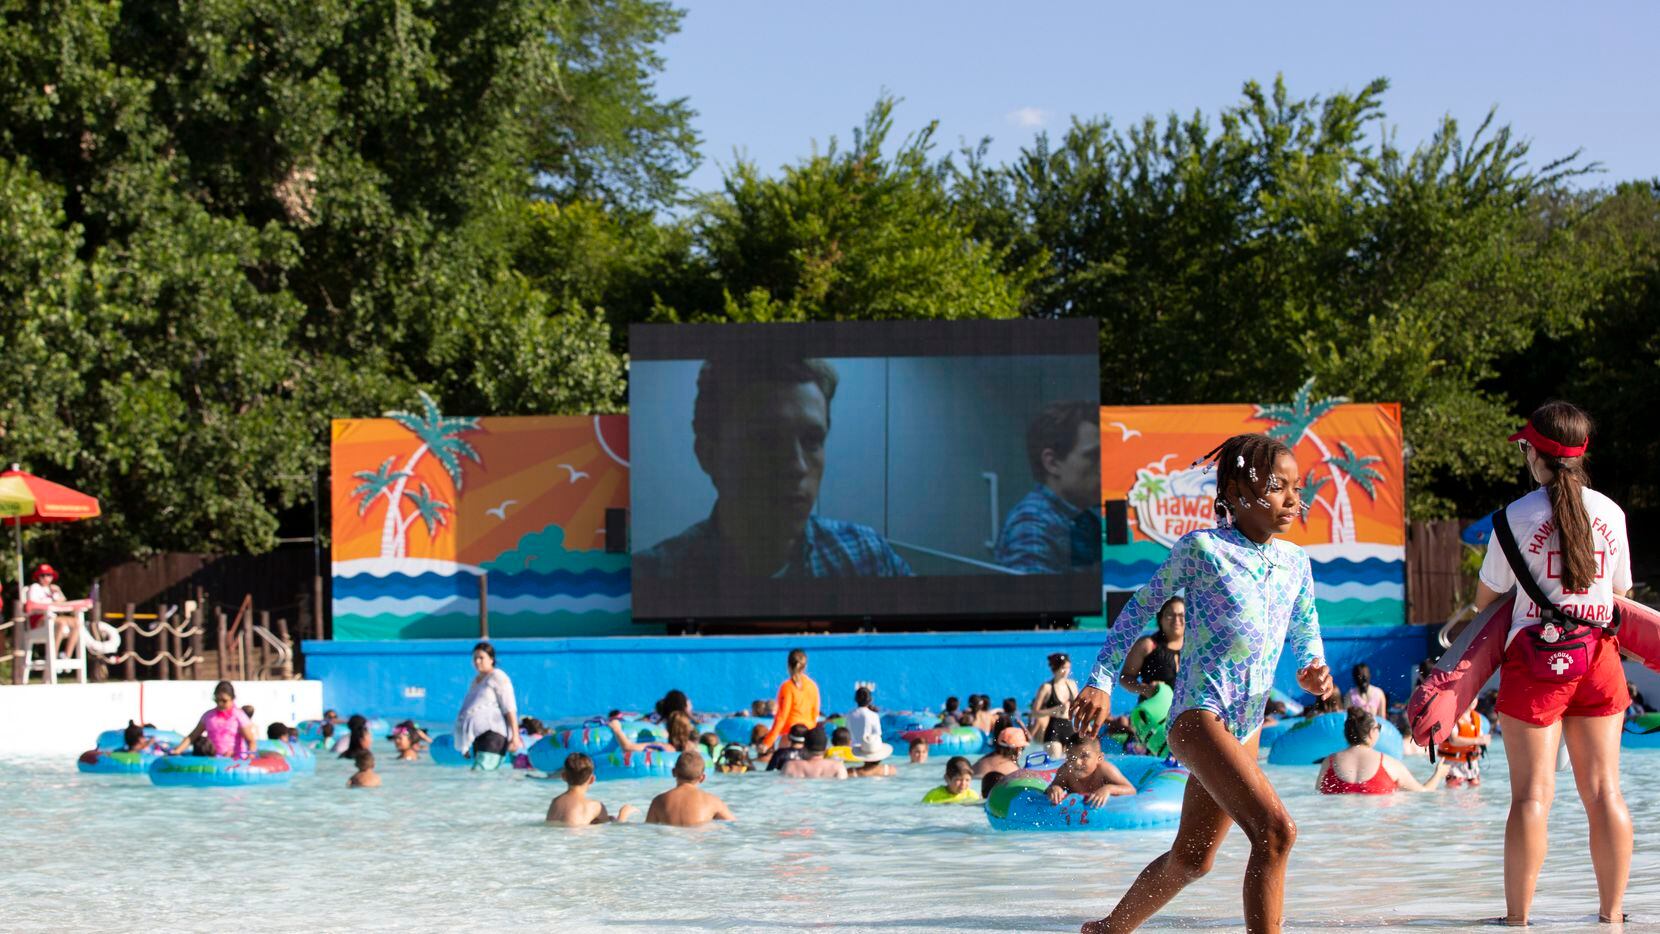 Hawaiian Falls in Garland is hosting Dive­-In Movie nights at its wave pool. Screenings...